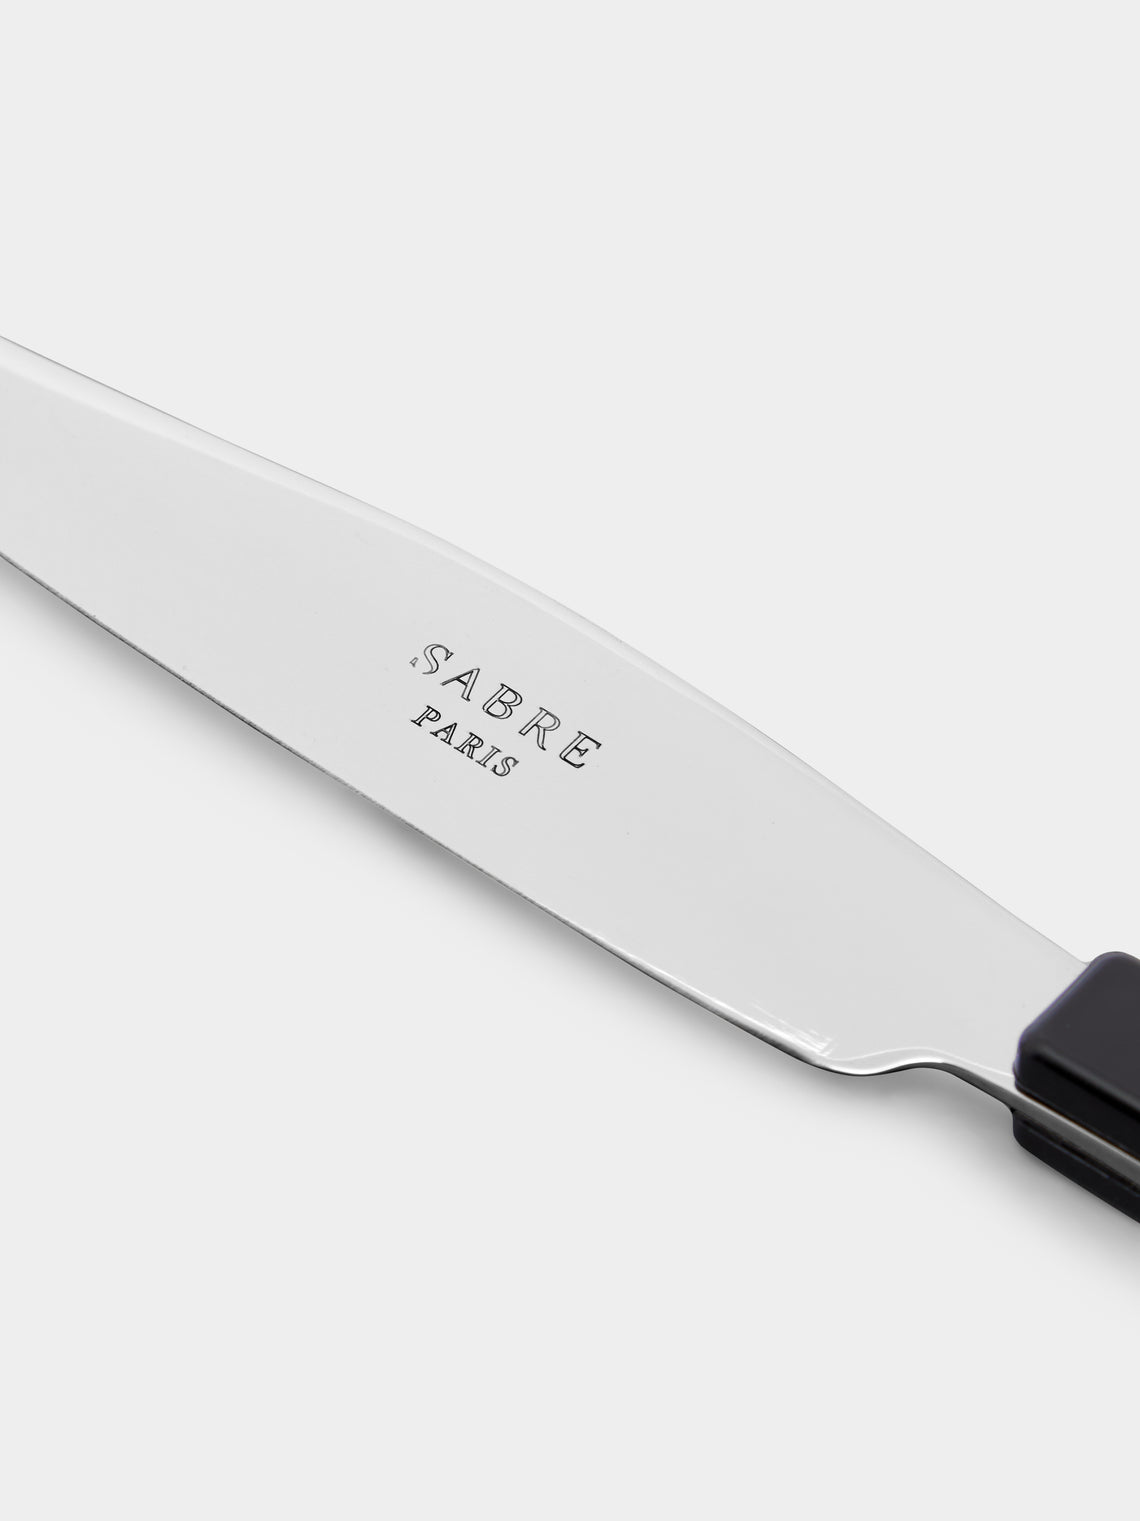 Sabre - Bistrot Cheese Knife - Black - ABASK